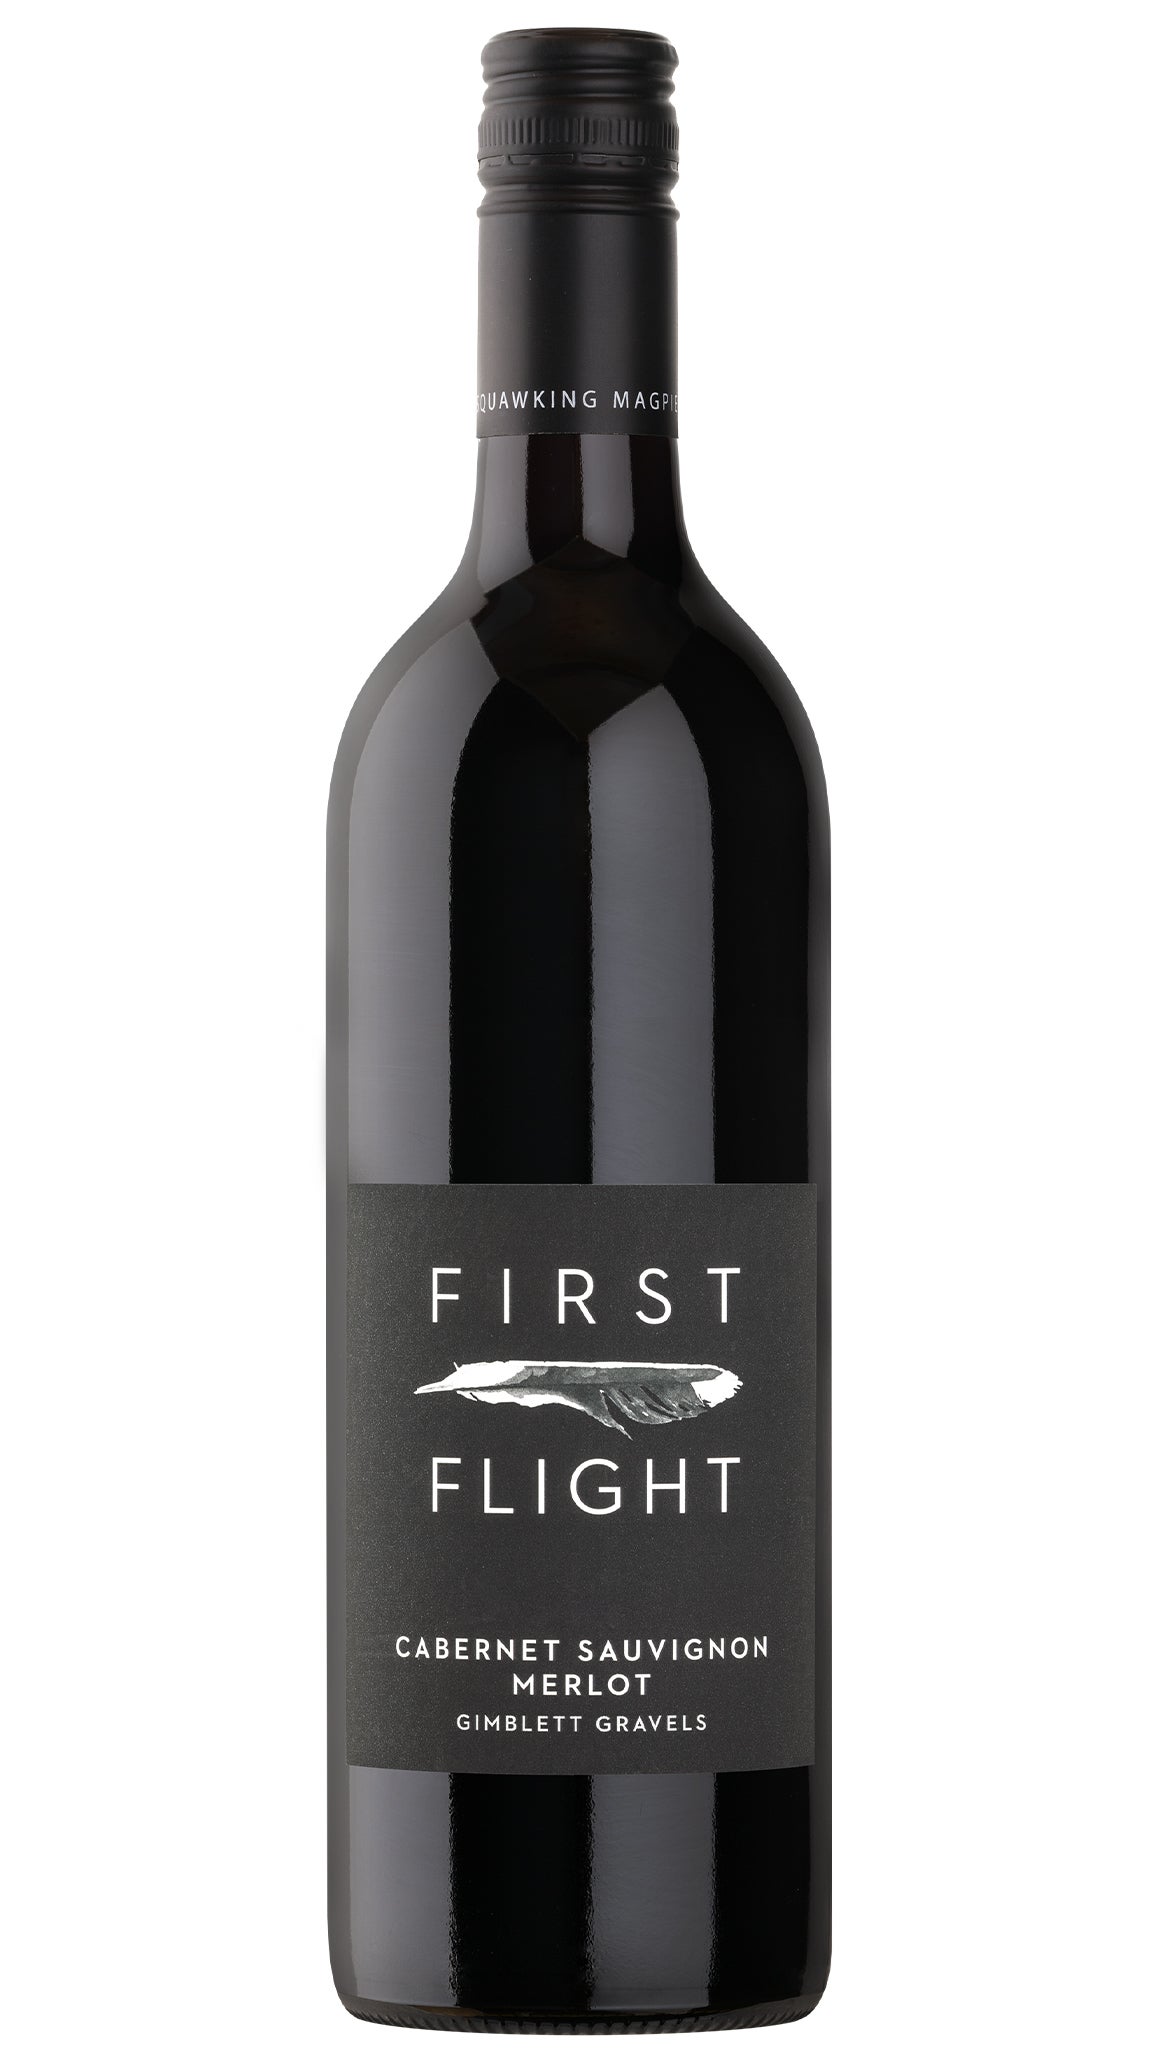 Wine Delivery First Merlot Squawking Magpie Cabernet - Flight 2020 Fine Sauvignon